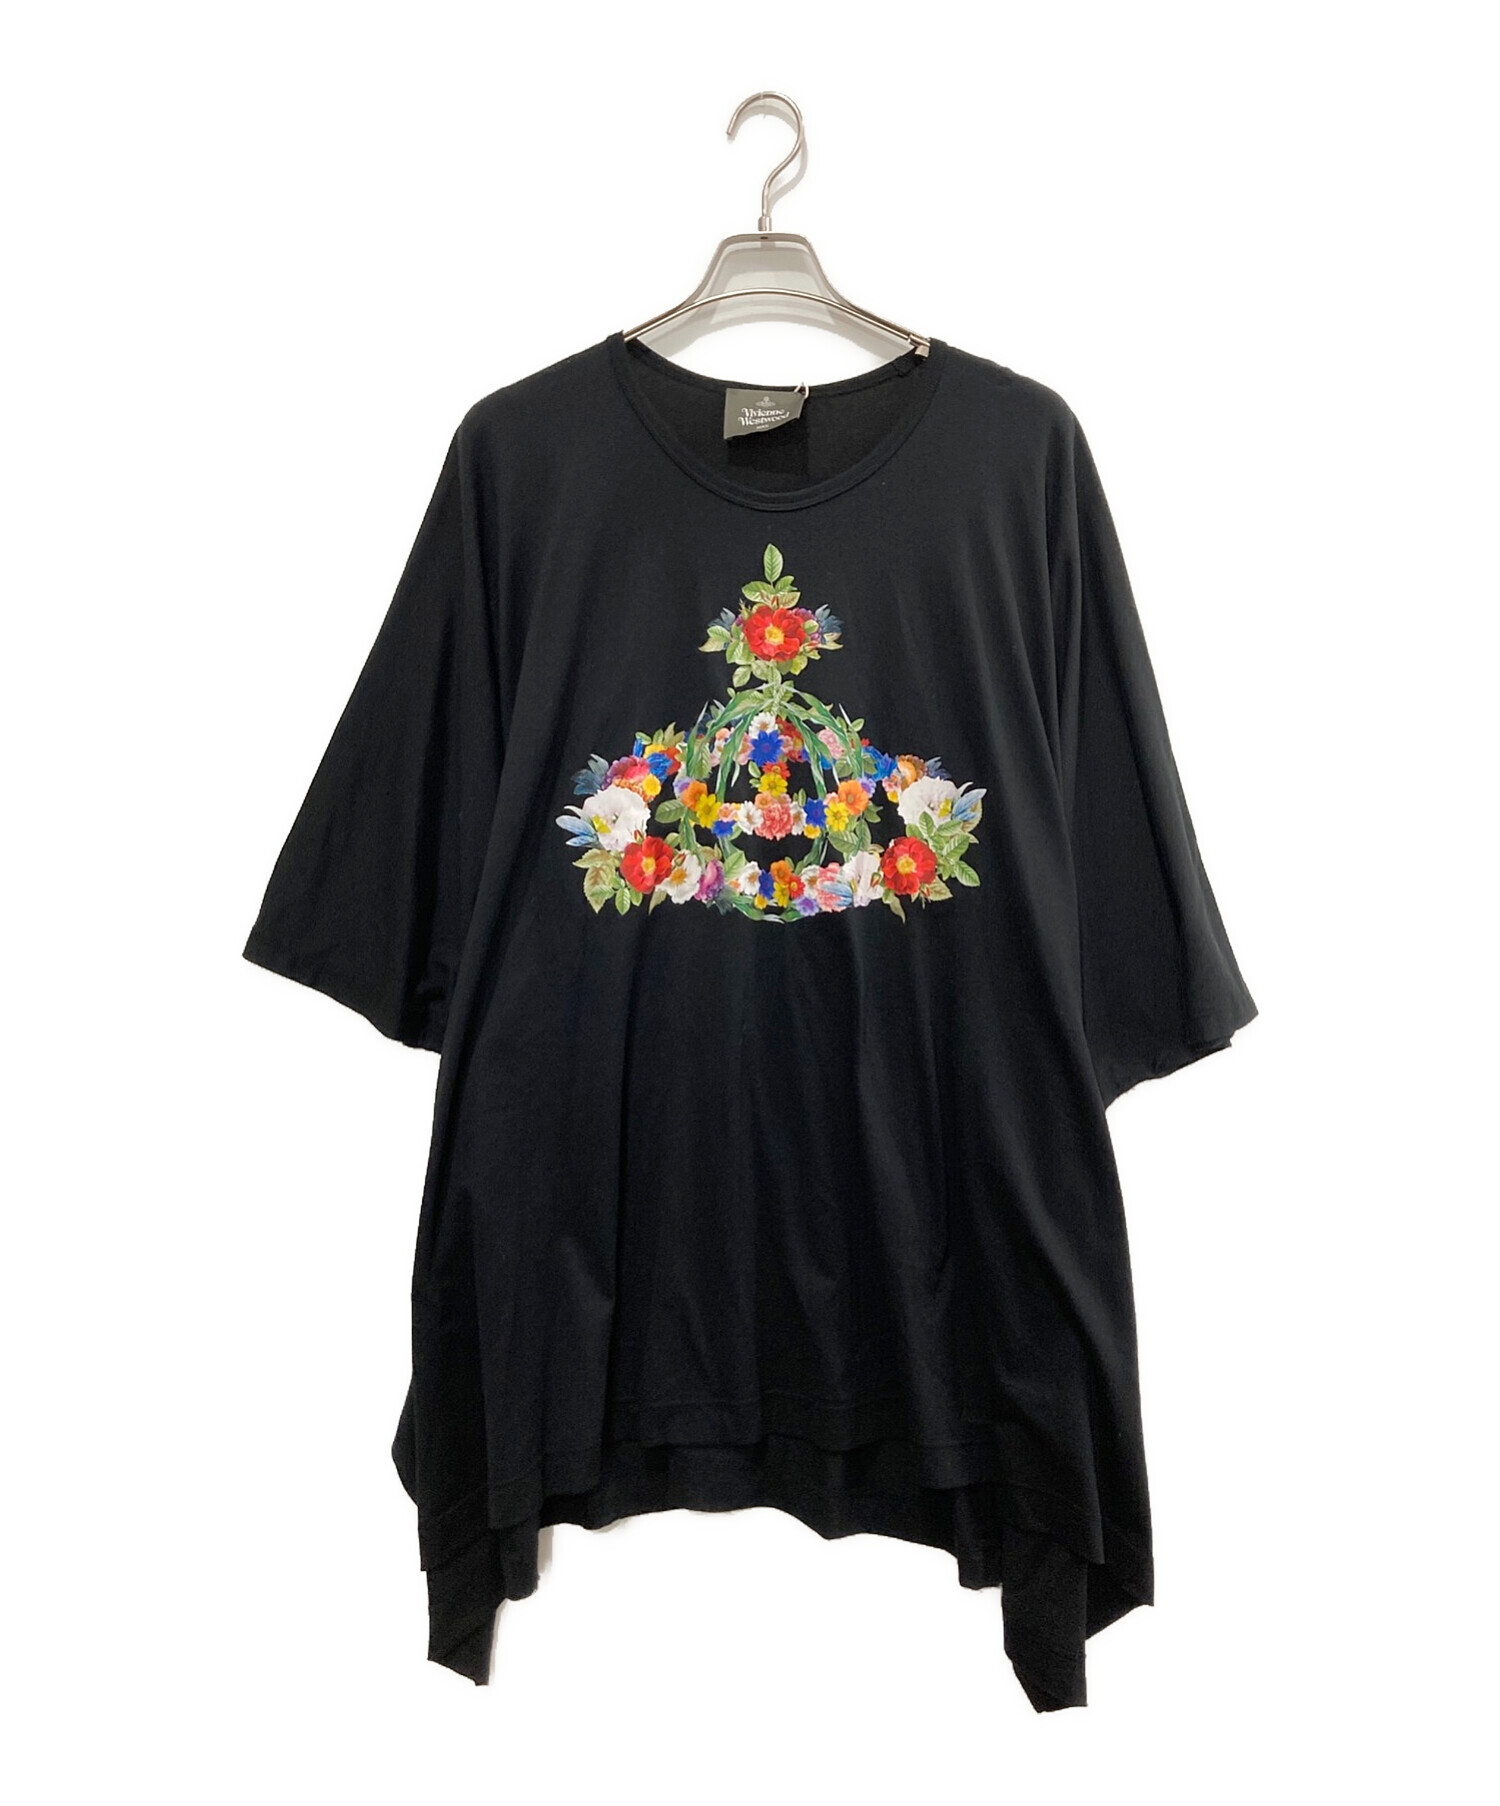 Vivienne Westwood man (ヴィヴィアン ウェストウッド マン) フラワーエレファントTシャツ/149047/5117 ブラック  サイズ:FREE